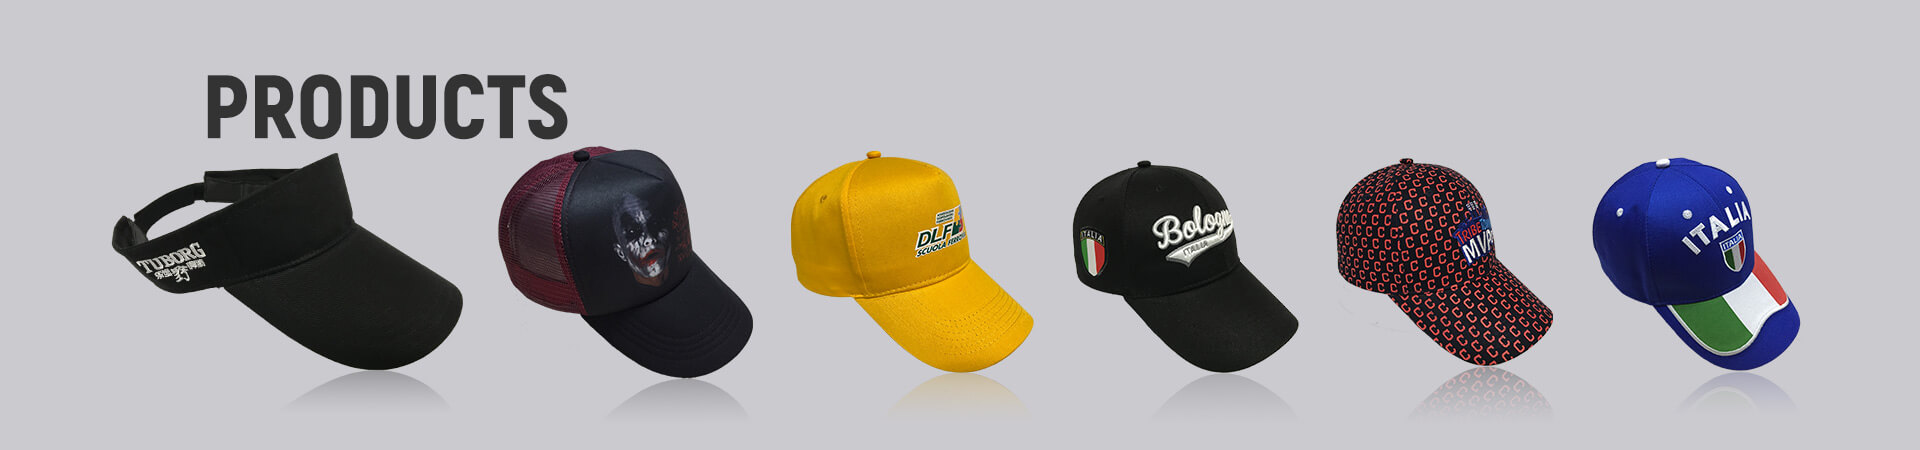 Sun Visor Archives - Baseball Cap,Sports Cap,Golf Cap,Bucket Hat,Fisherman Hat,Trucker Hat